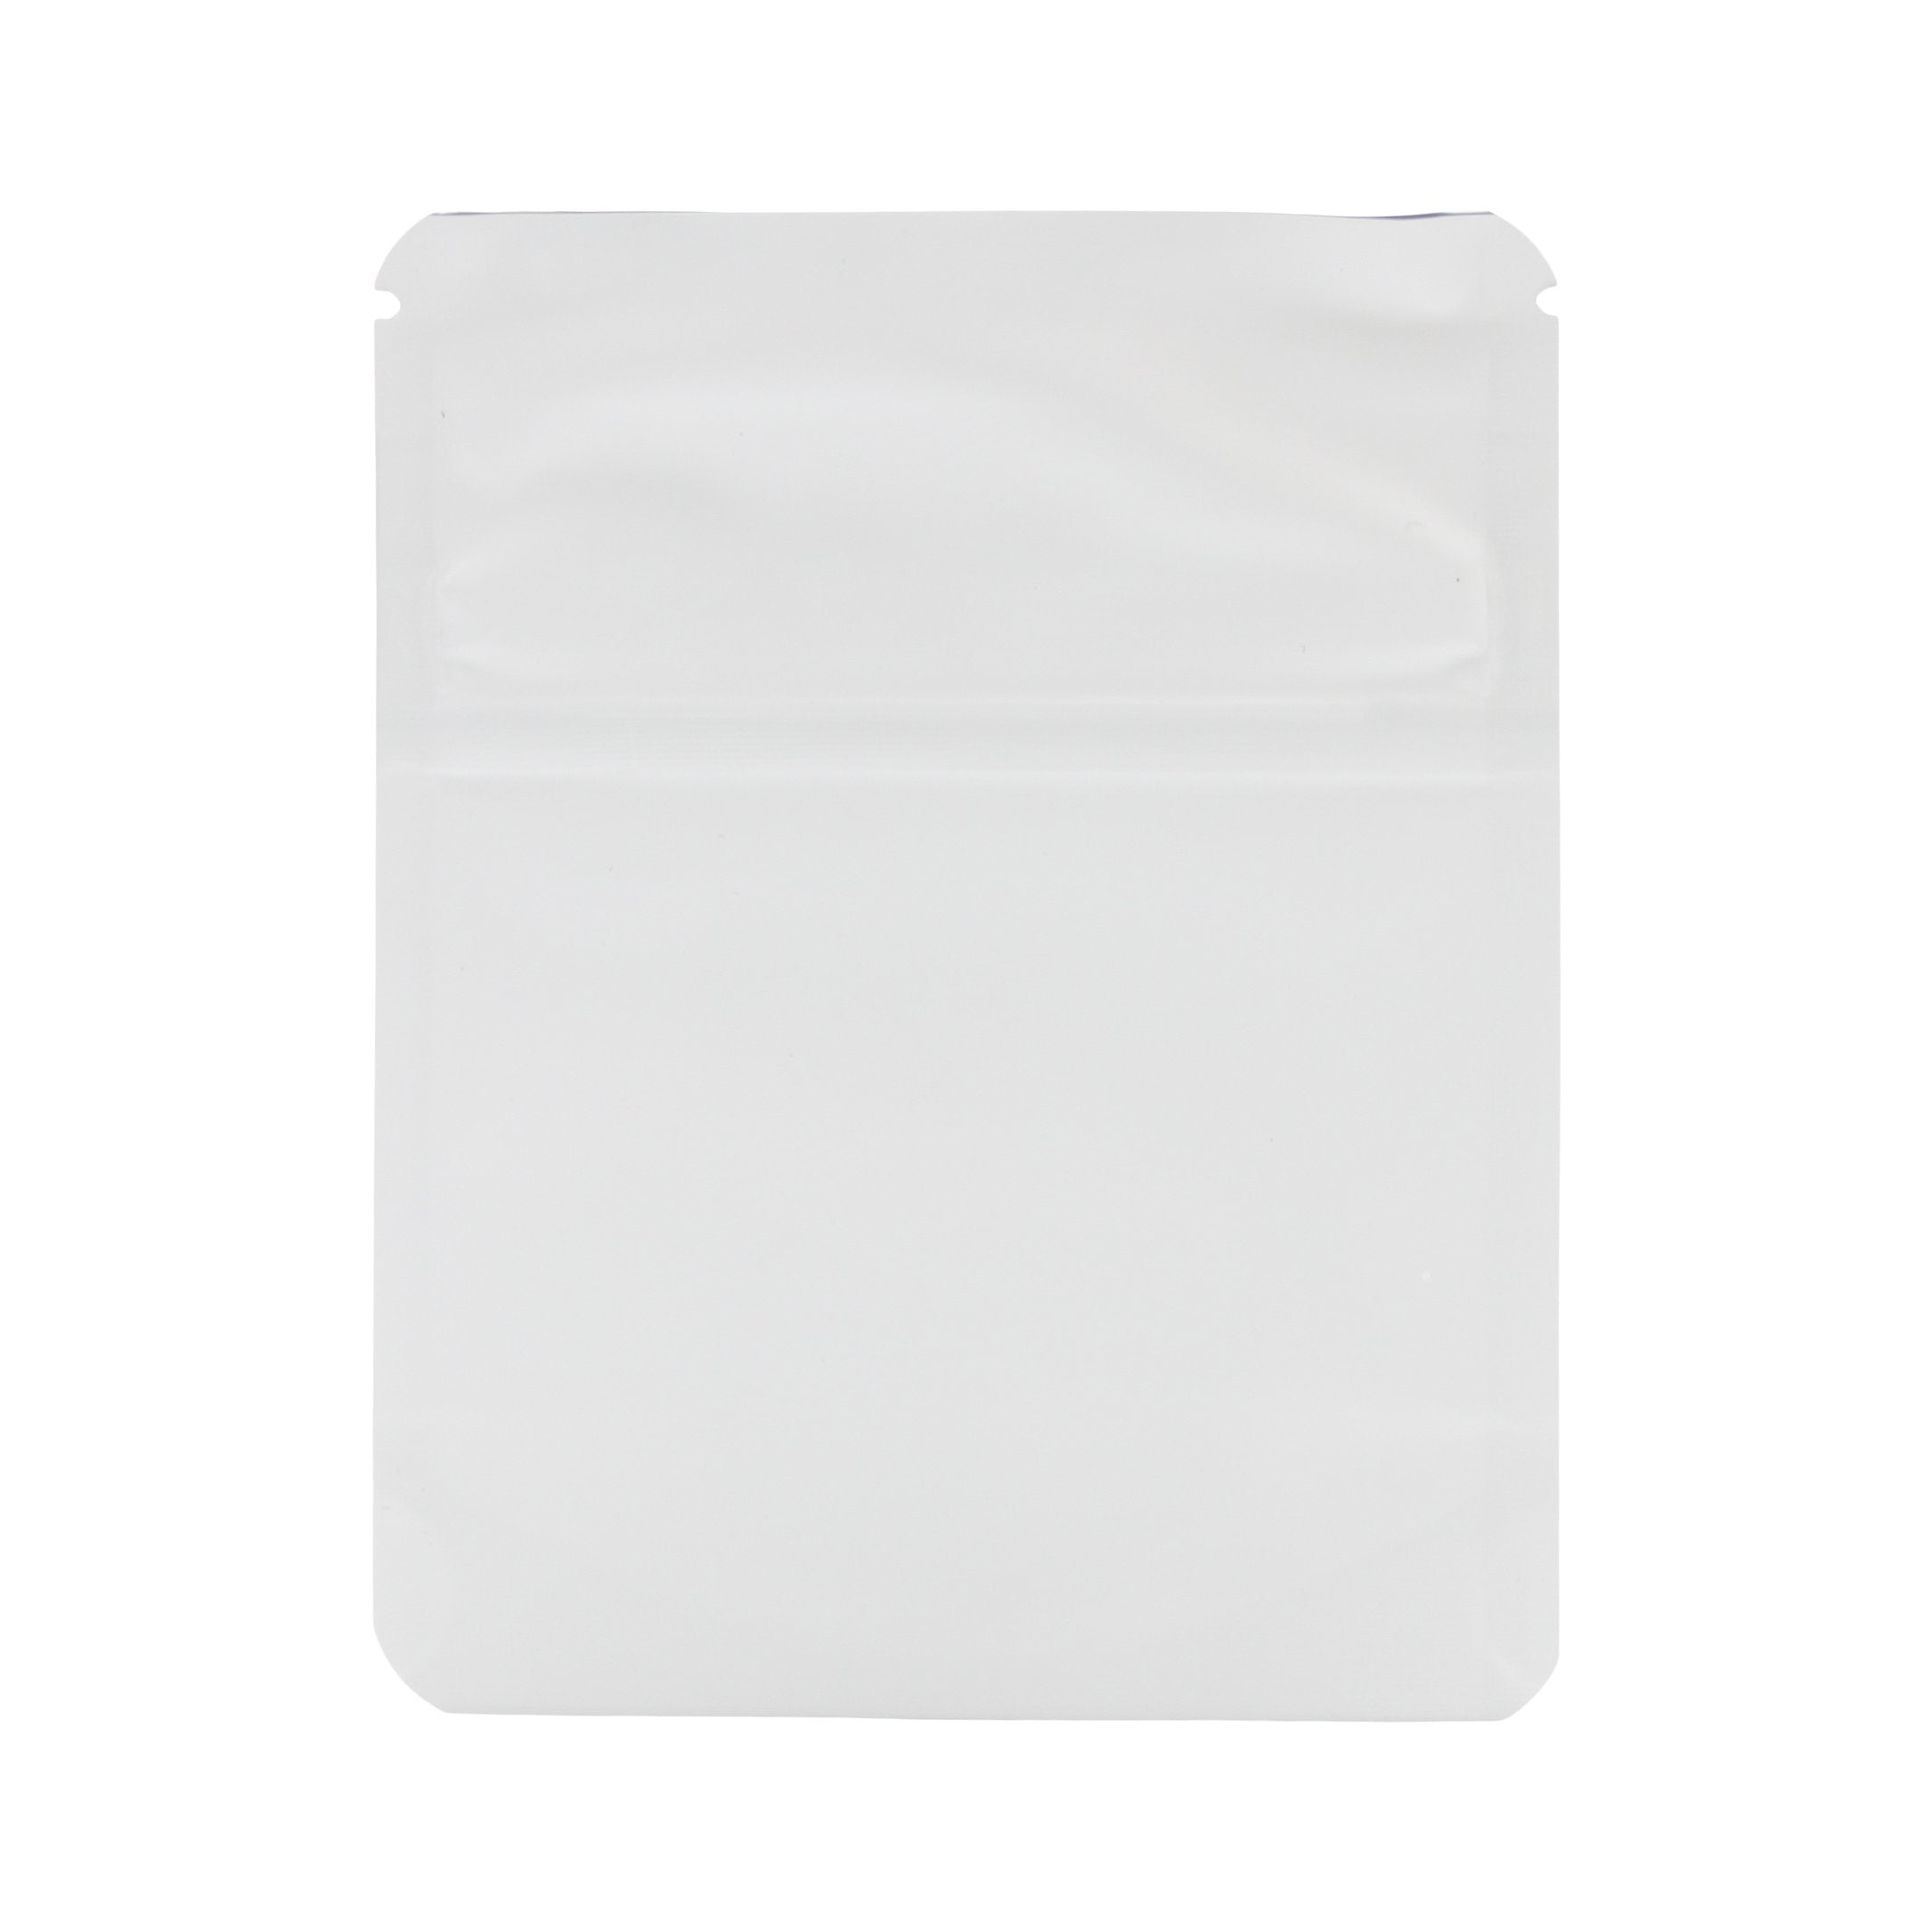 Bag King Child-Resistant Opaque Bag (1 gram) 3.5” x 4.5” Matte White